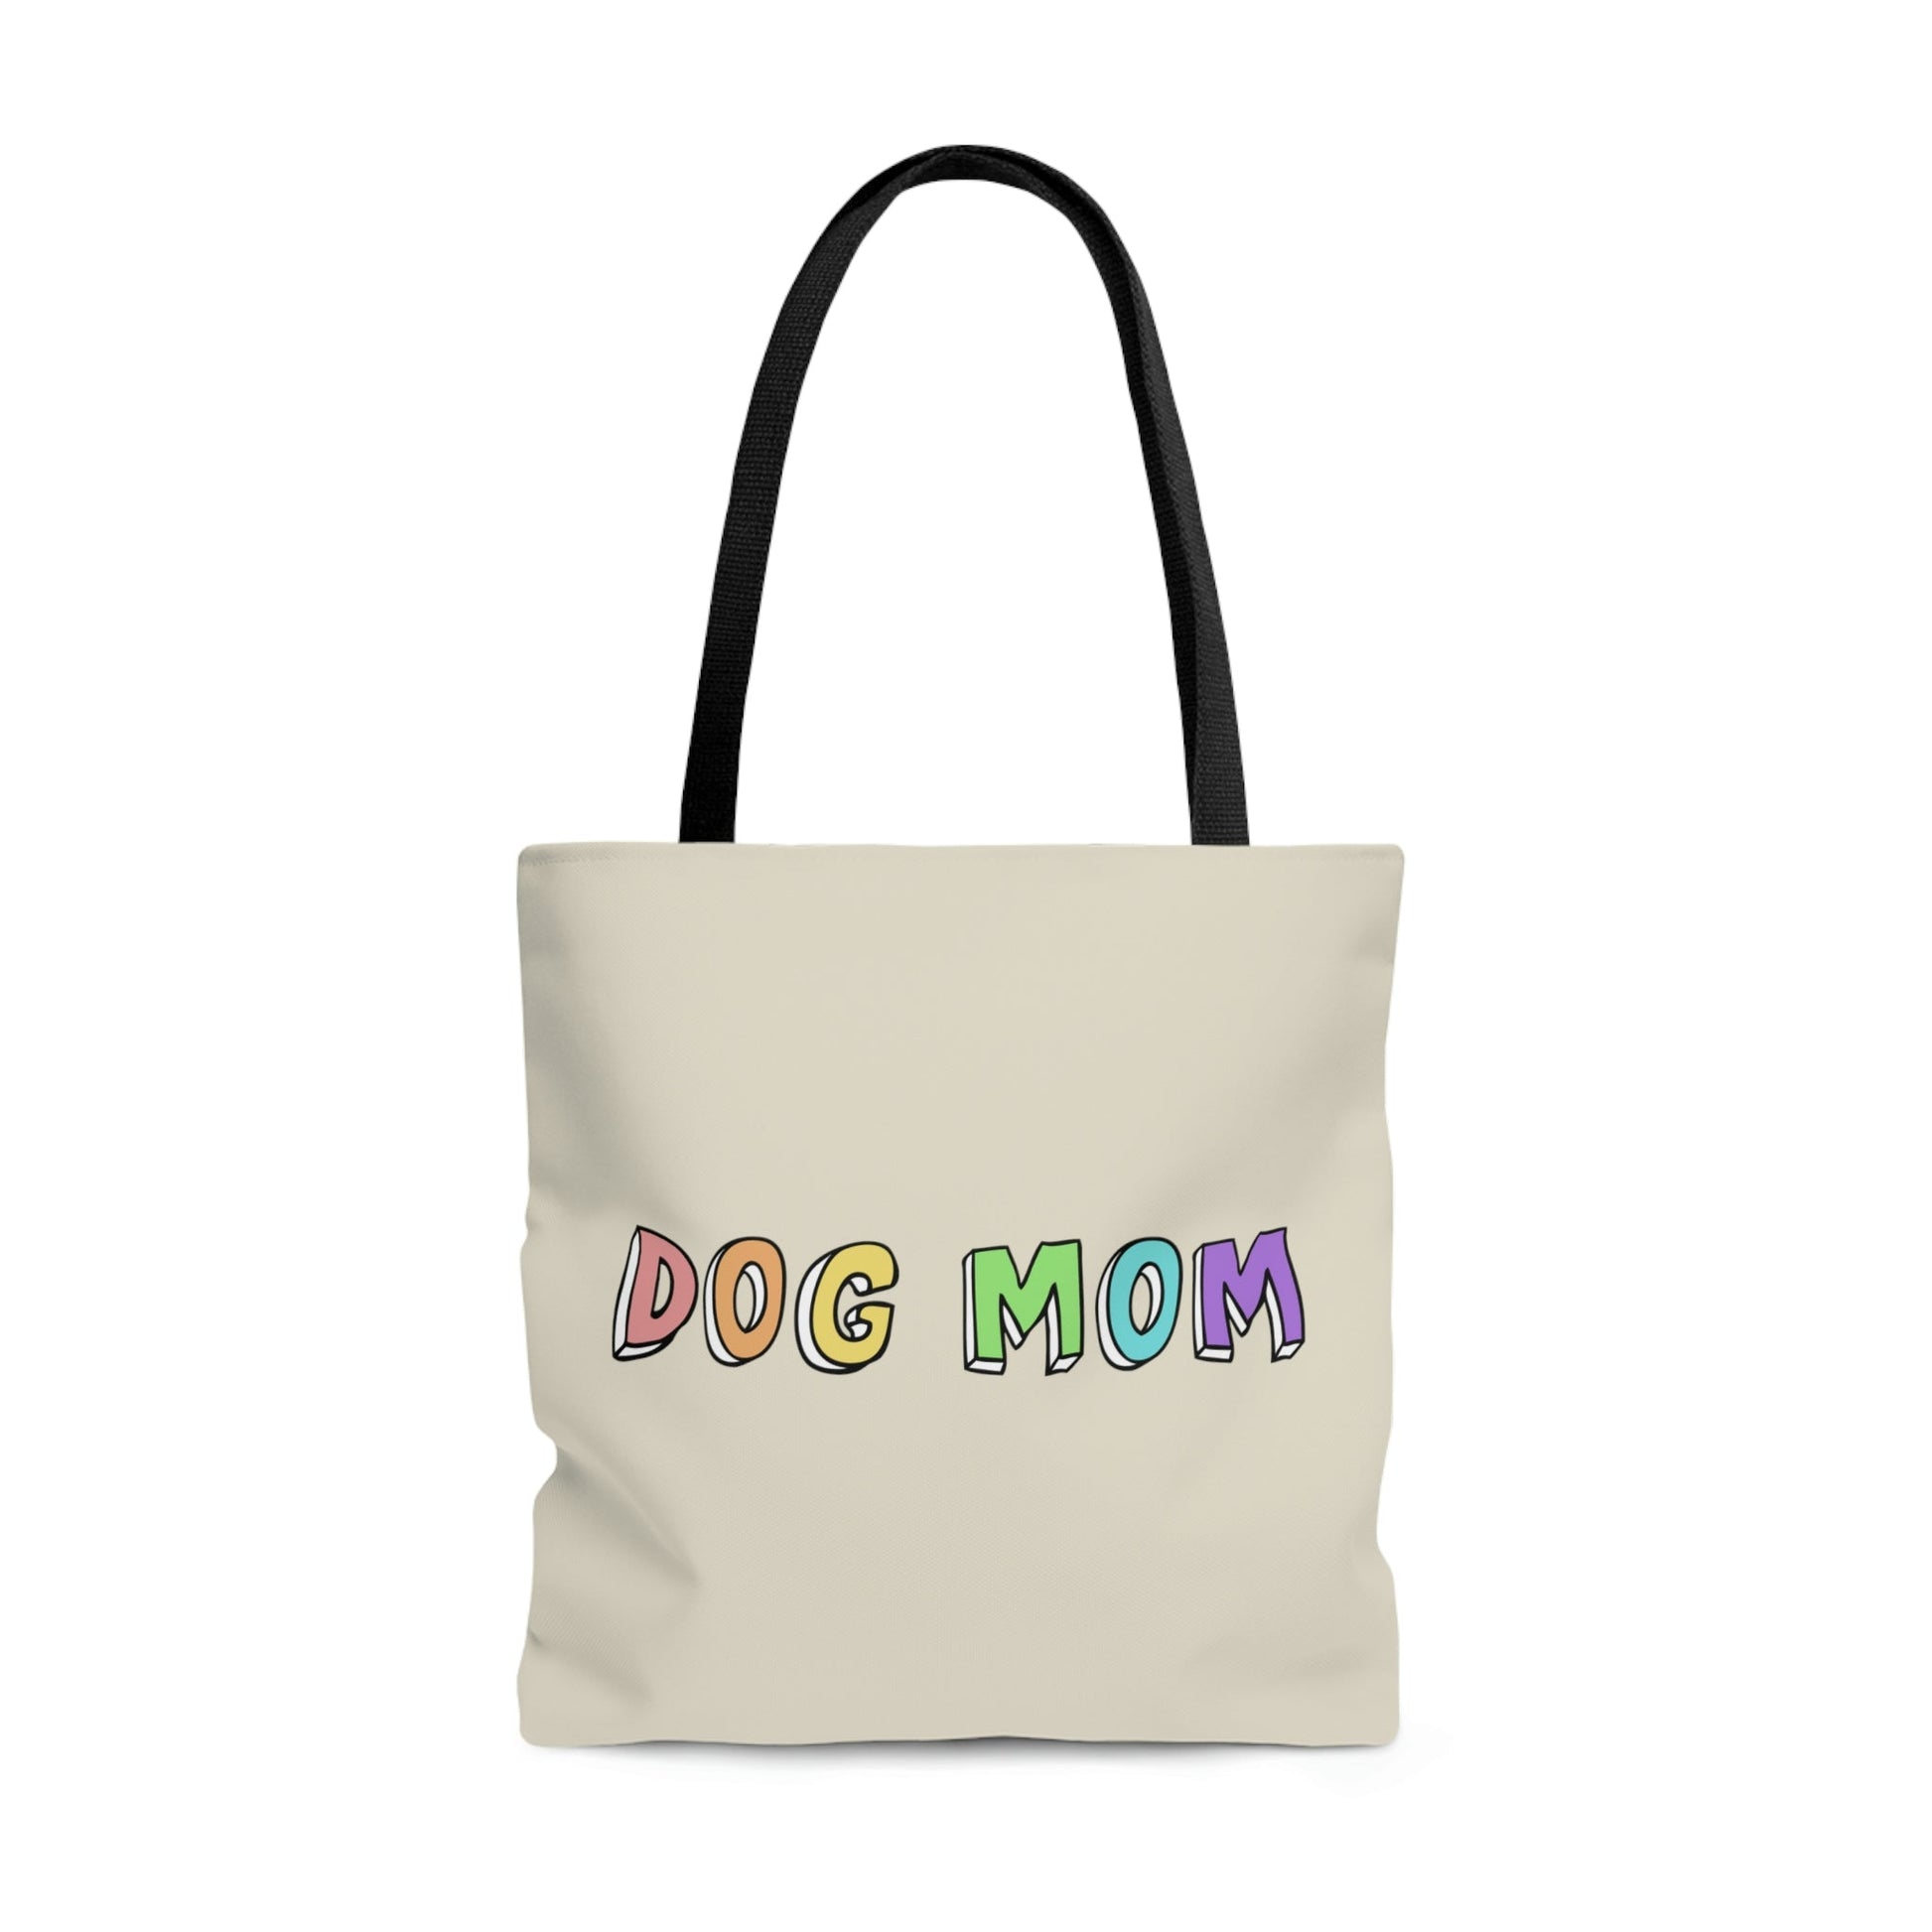 Dog Mom | Tote Bag - Detezi Designs-13693938010969124994